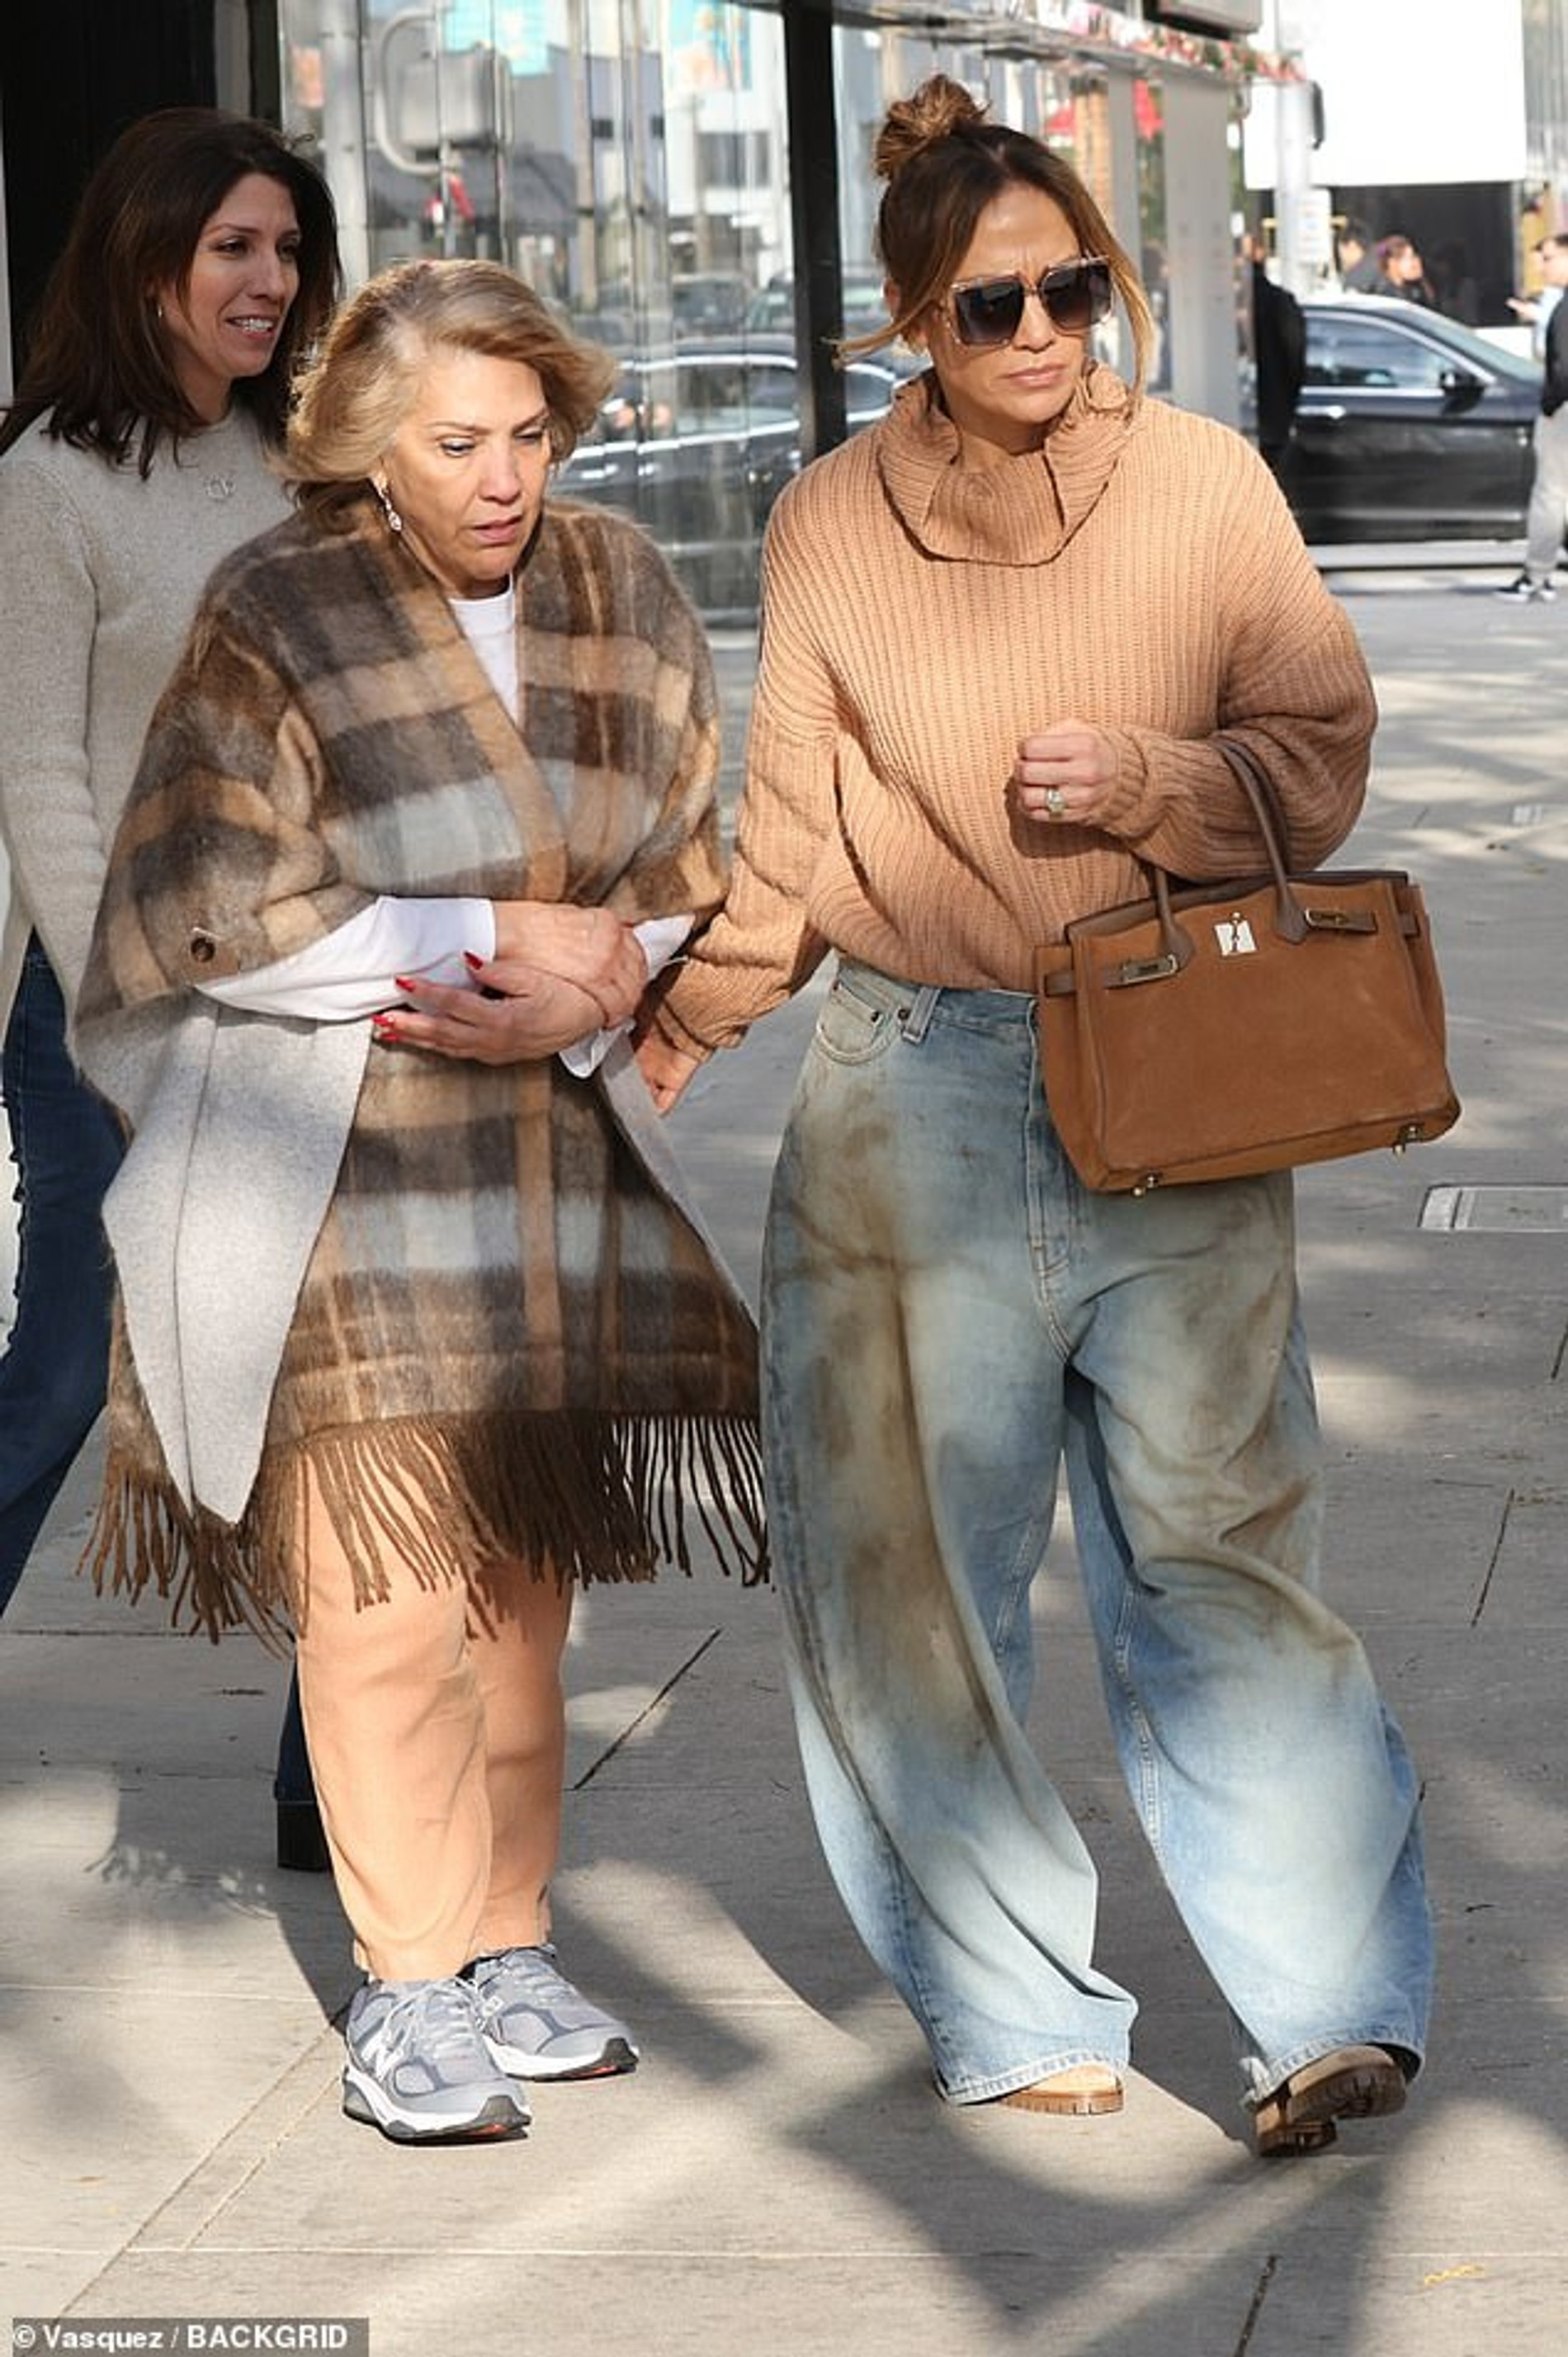 Дженнифер Лопес мамой на шопинге. Фото: Daily Mail